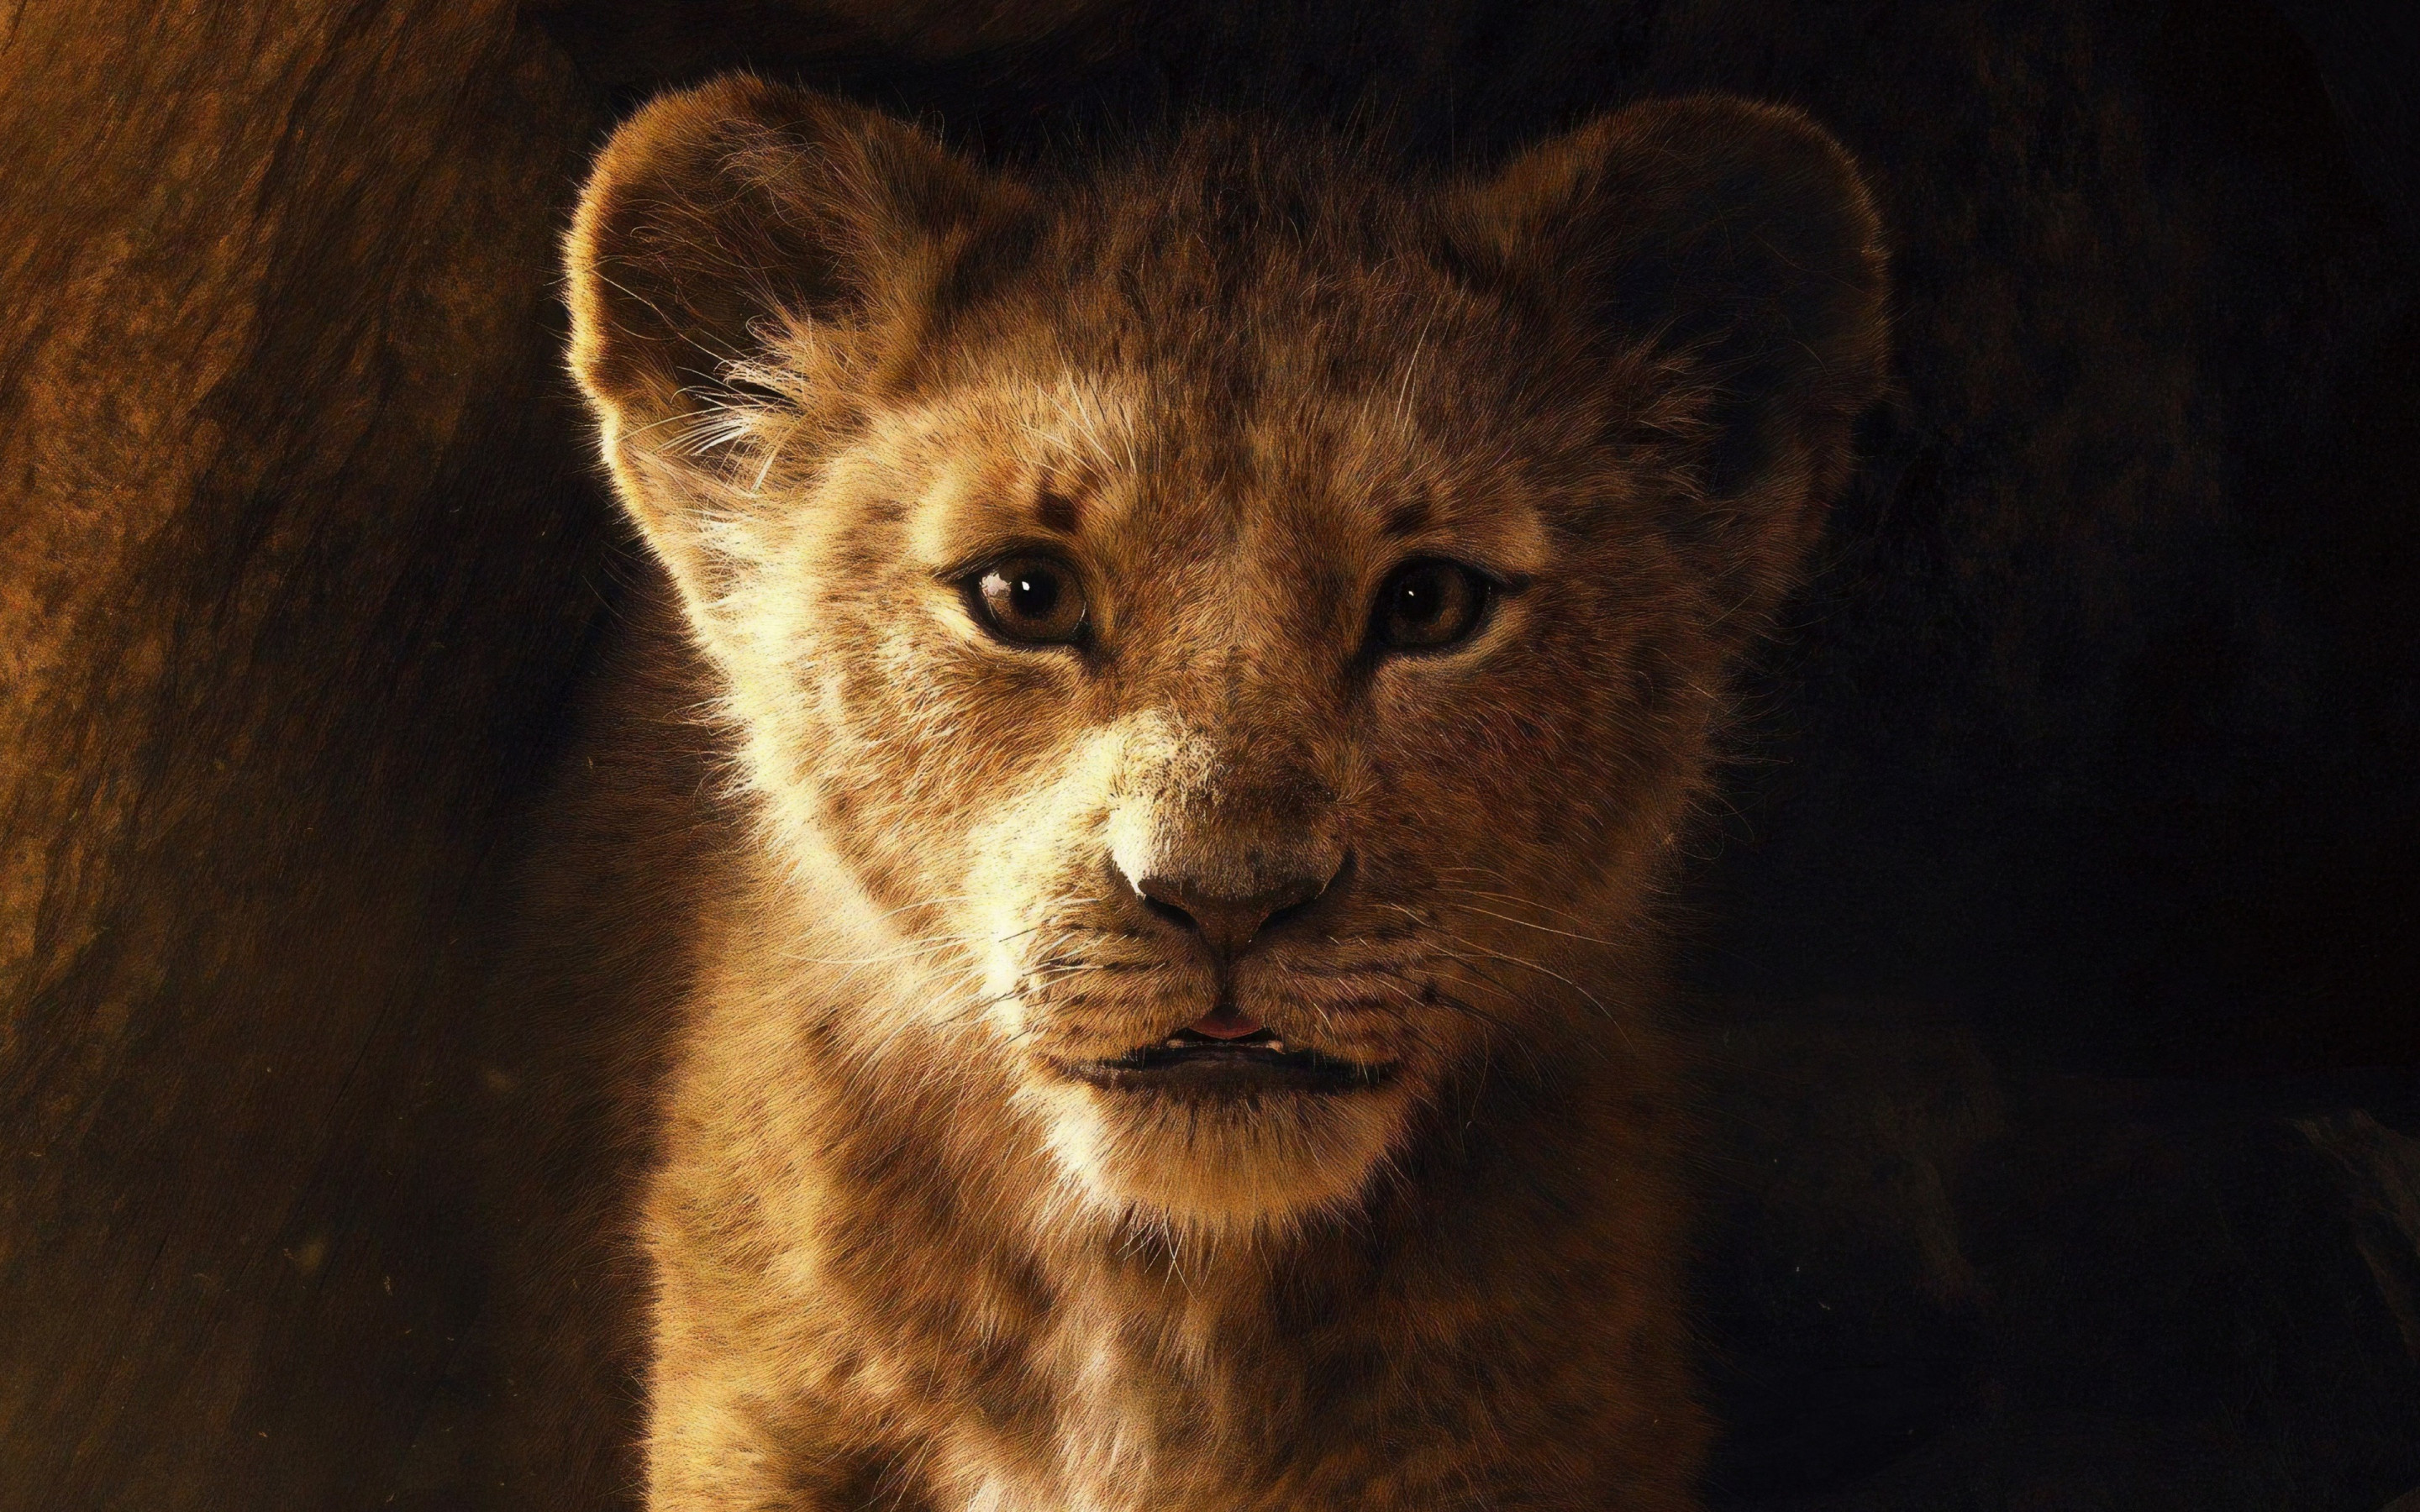 The Lion King 2019 wallpaper 2880x1800